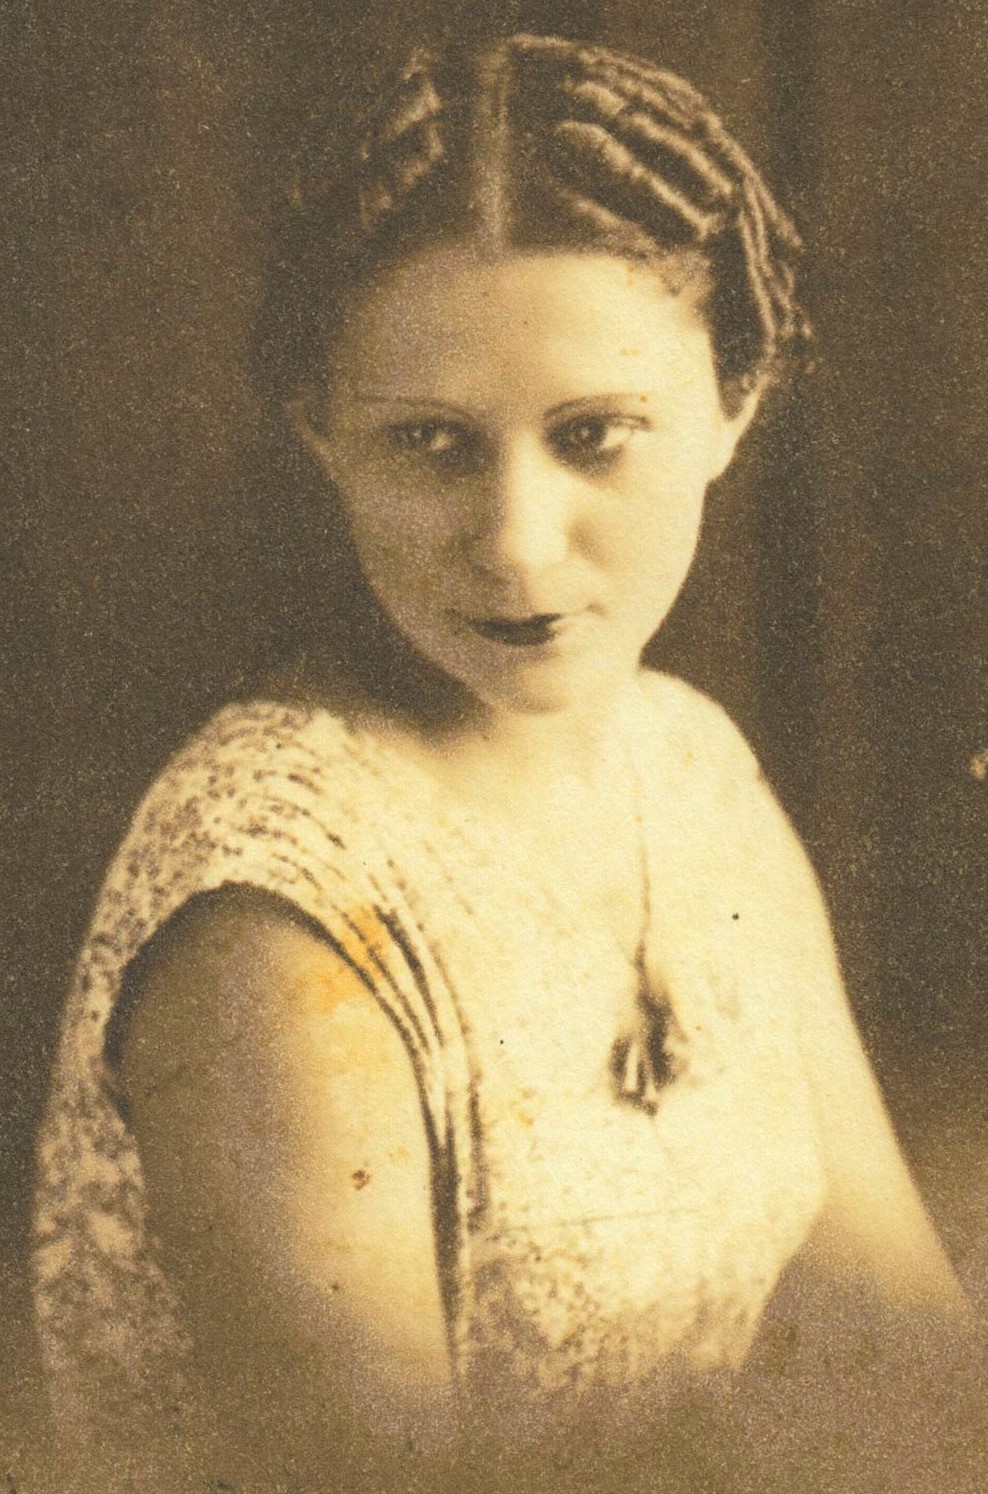 A sepia-toned headshot of Julia de Burgos